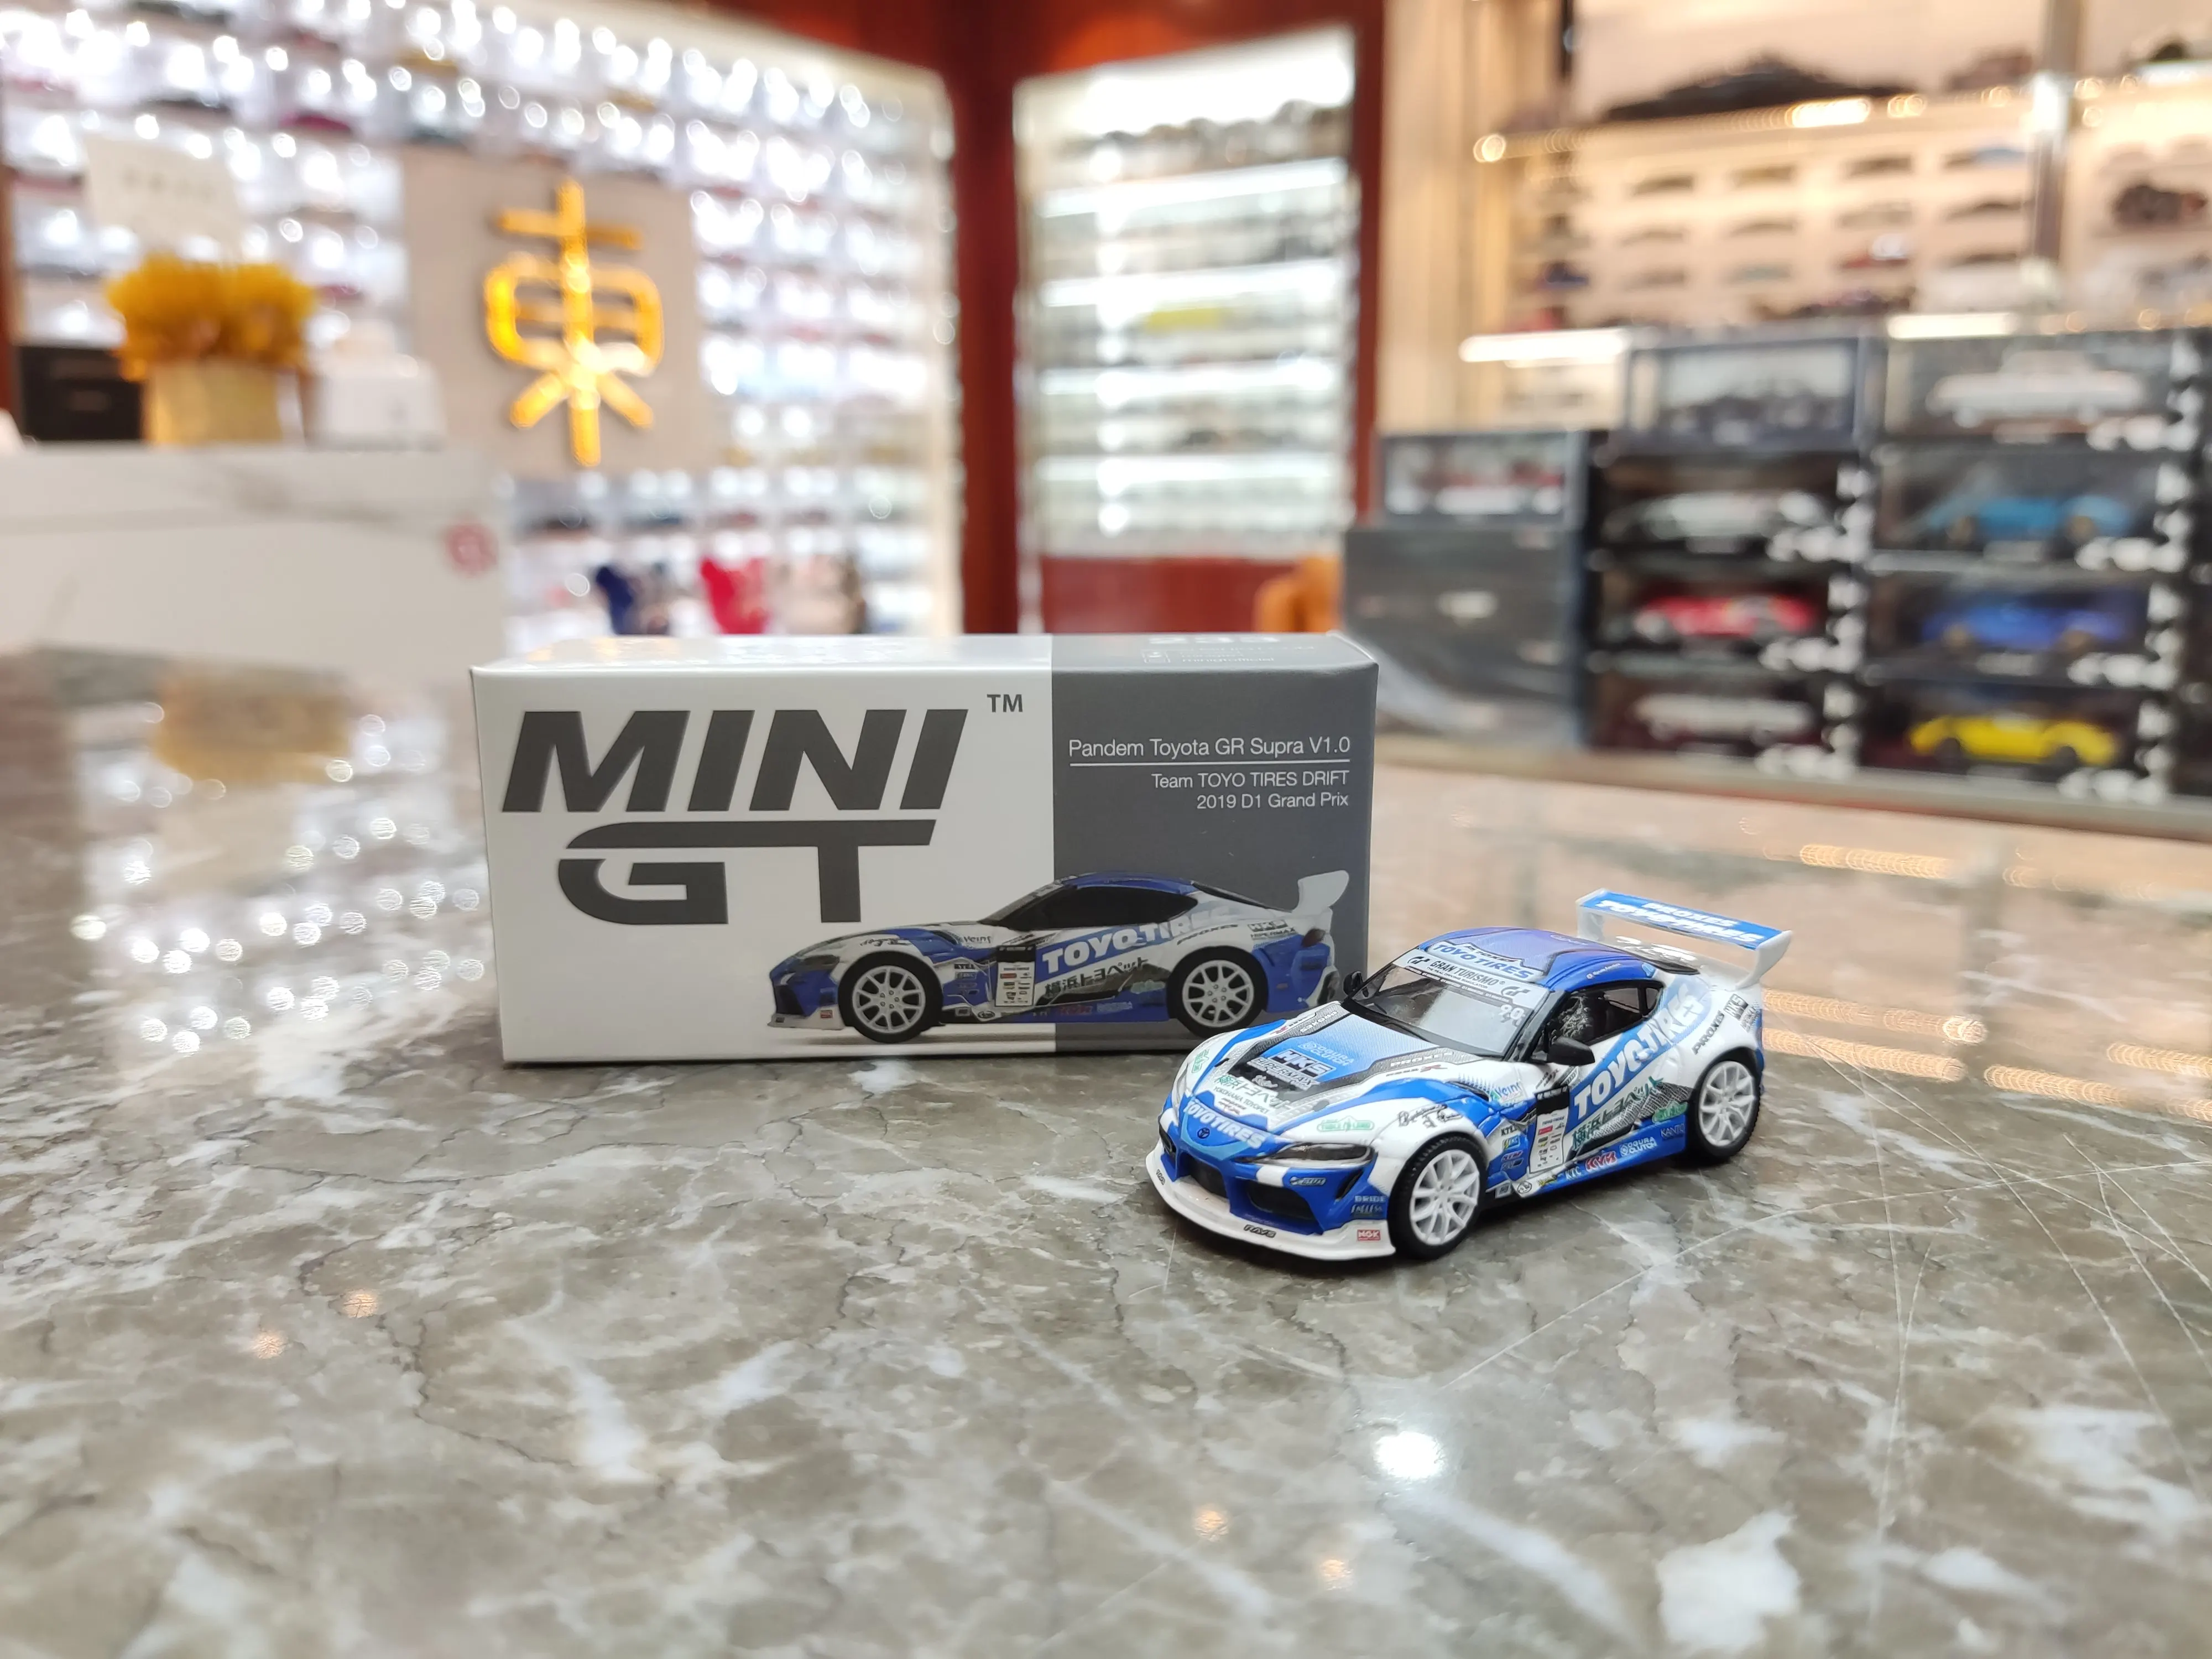 

MINI GT 1:64 Pandem GR Supra Collection Metal Die-cast Simulation Model Cars Toys